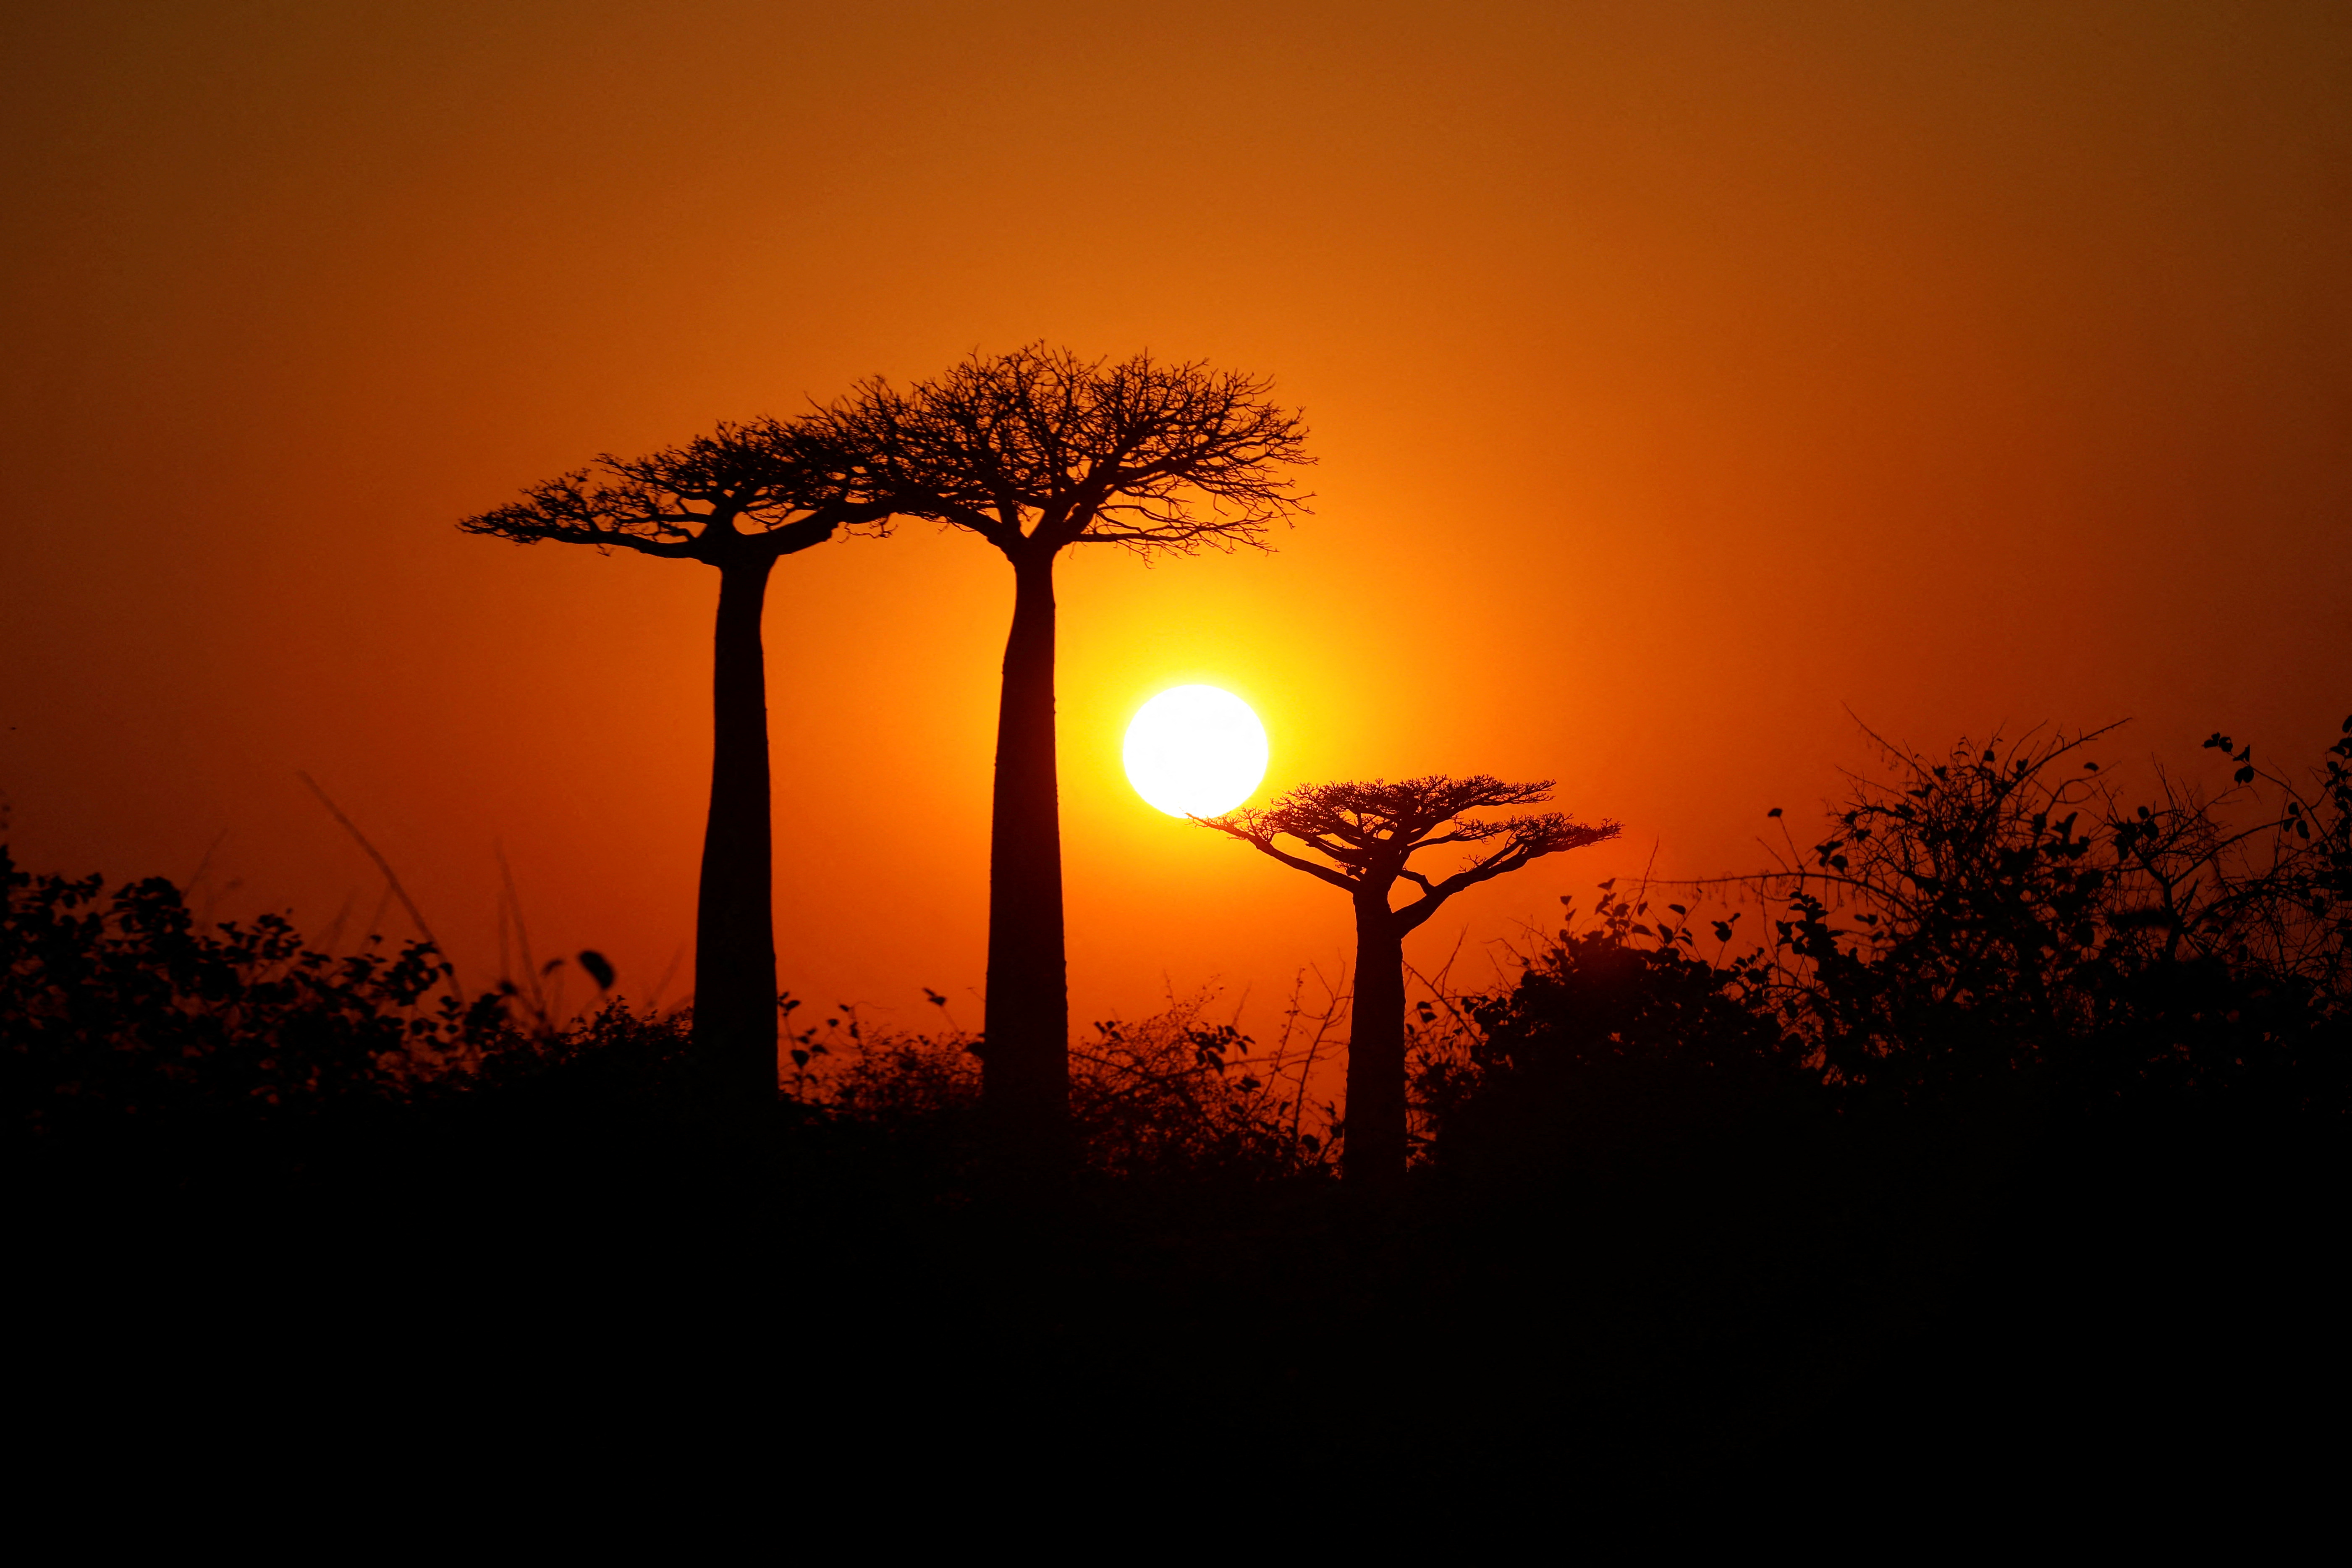 The sun rises behind Baobab trees at Baobab alley near the city of Morondava